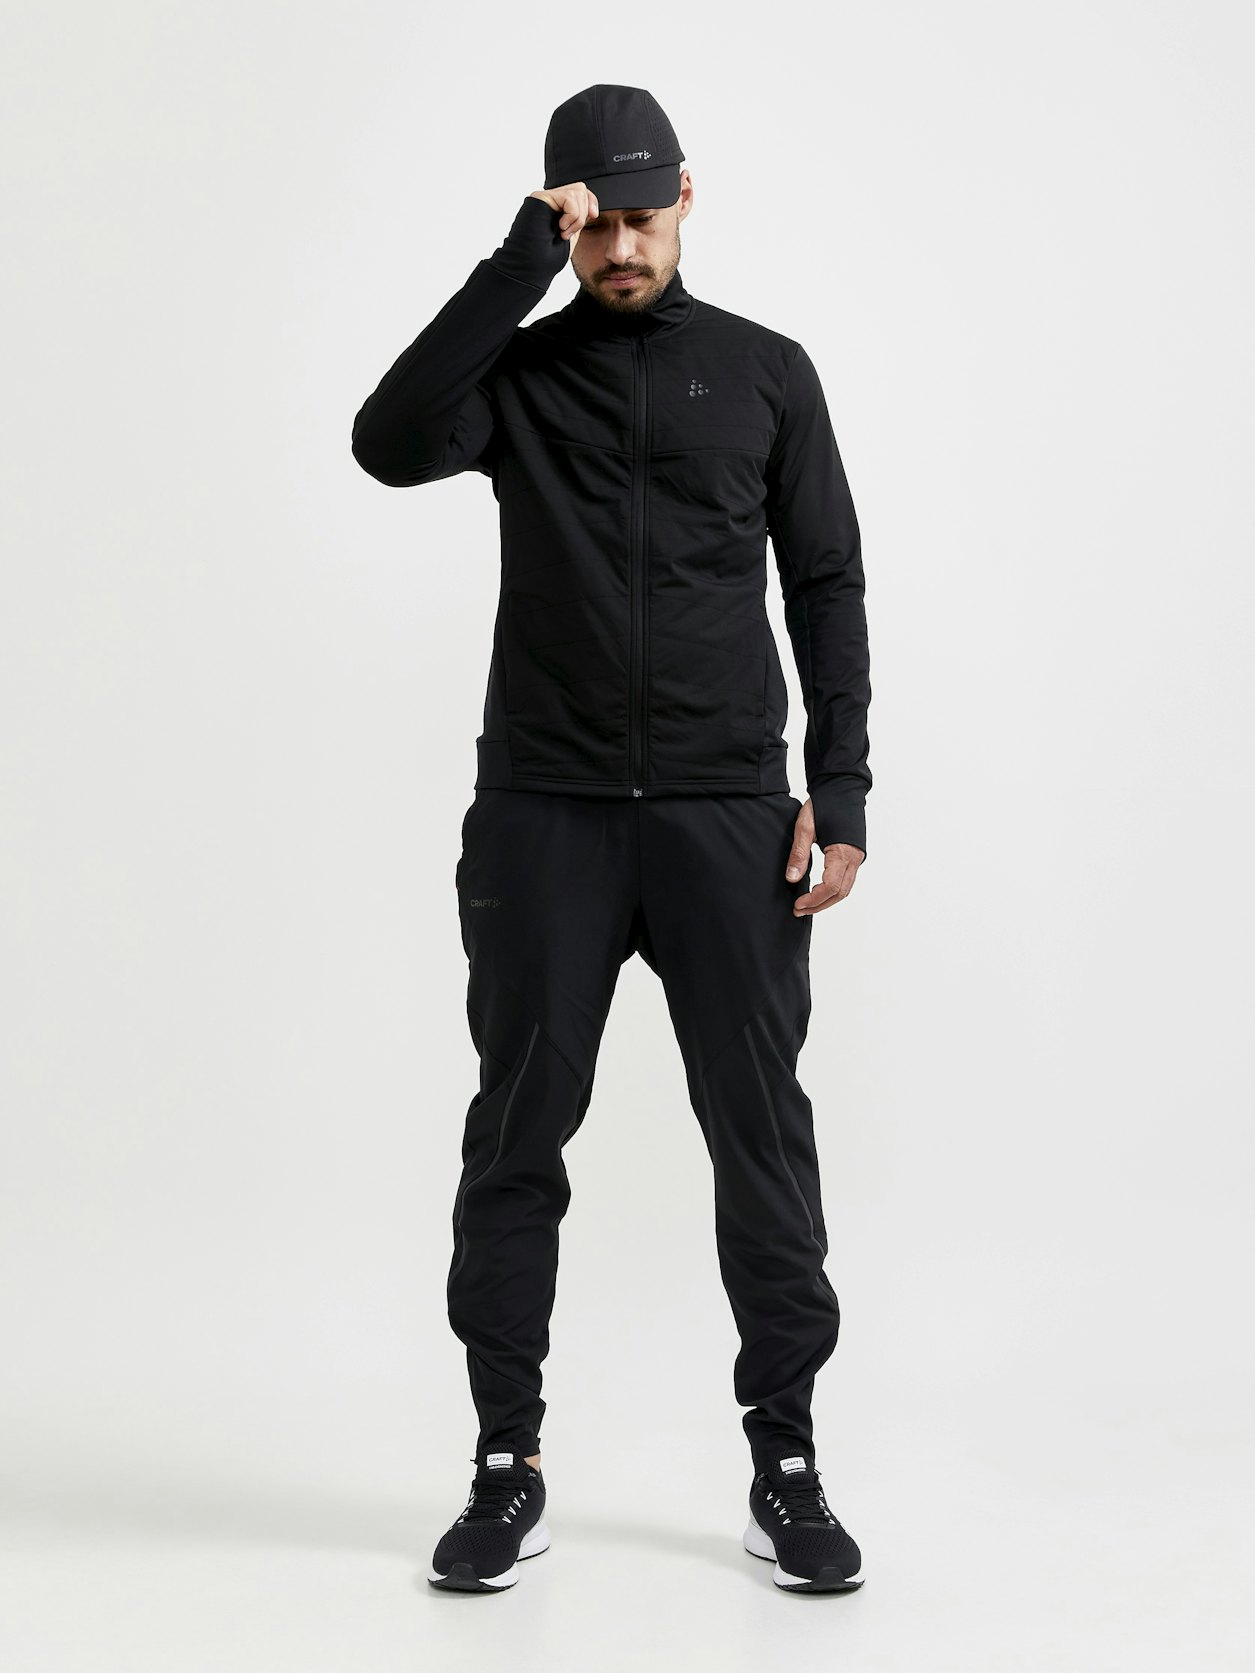 ADV Essence Black Jacket | Sportswear Craft - Warm M